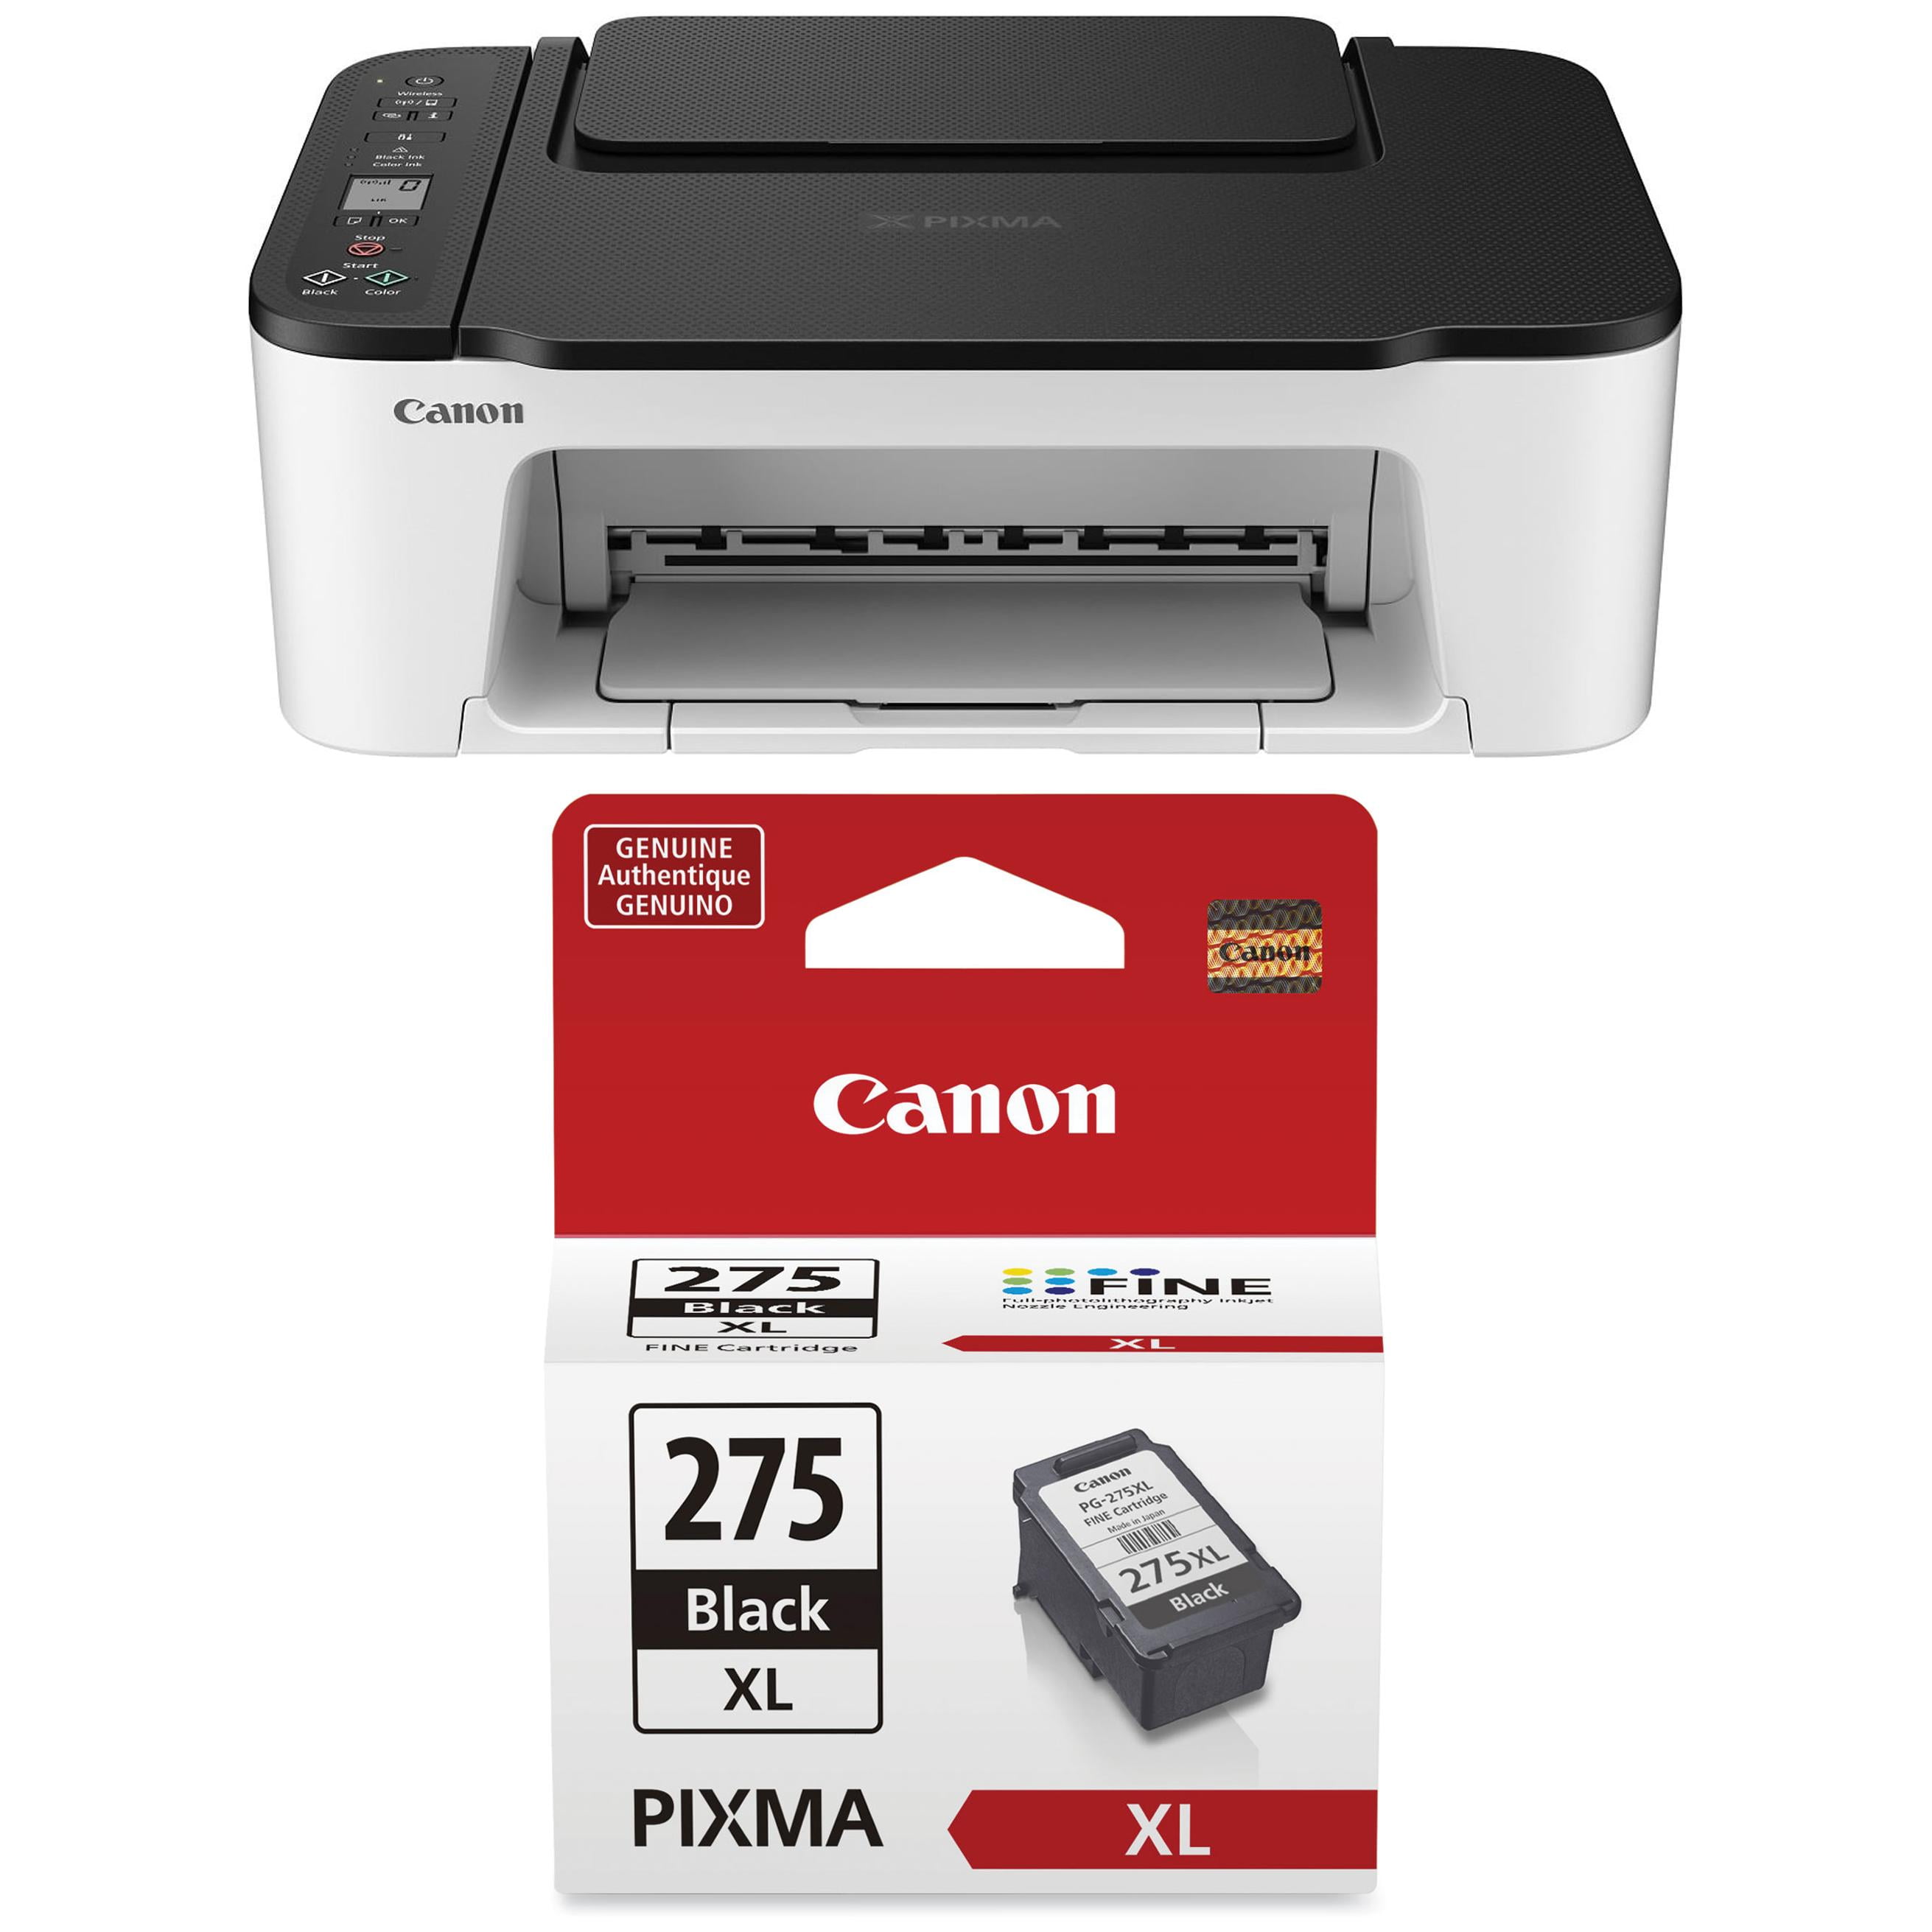 Canon Pixma TS3450 Setup, Wireless Setup, Install Setup Ink, Load